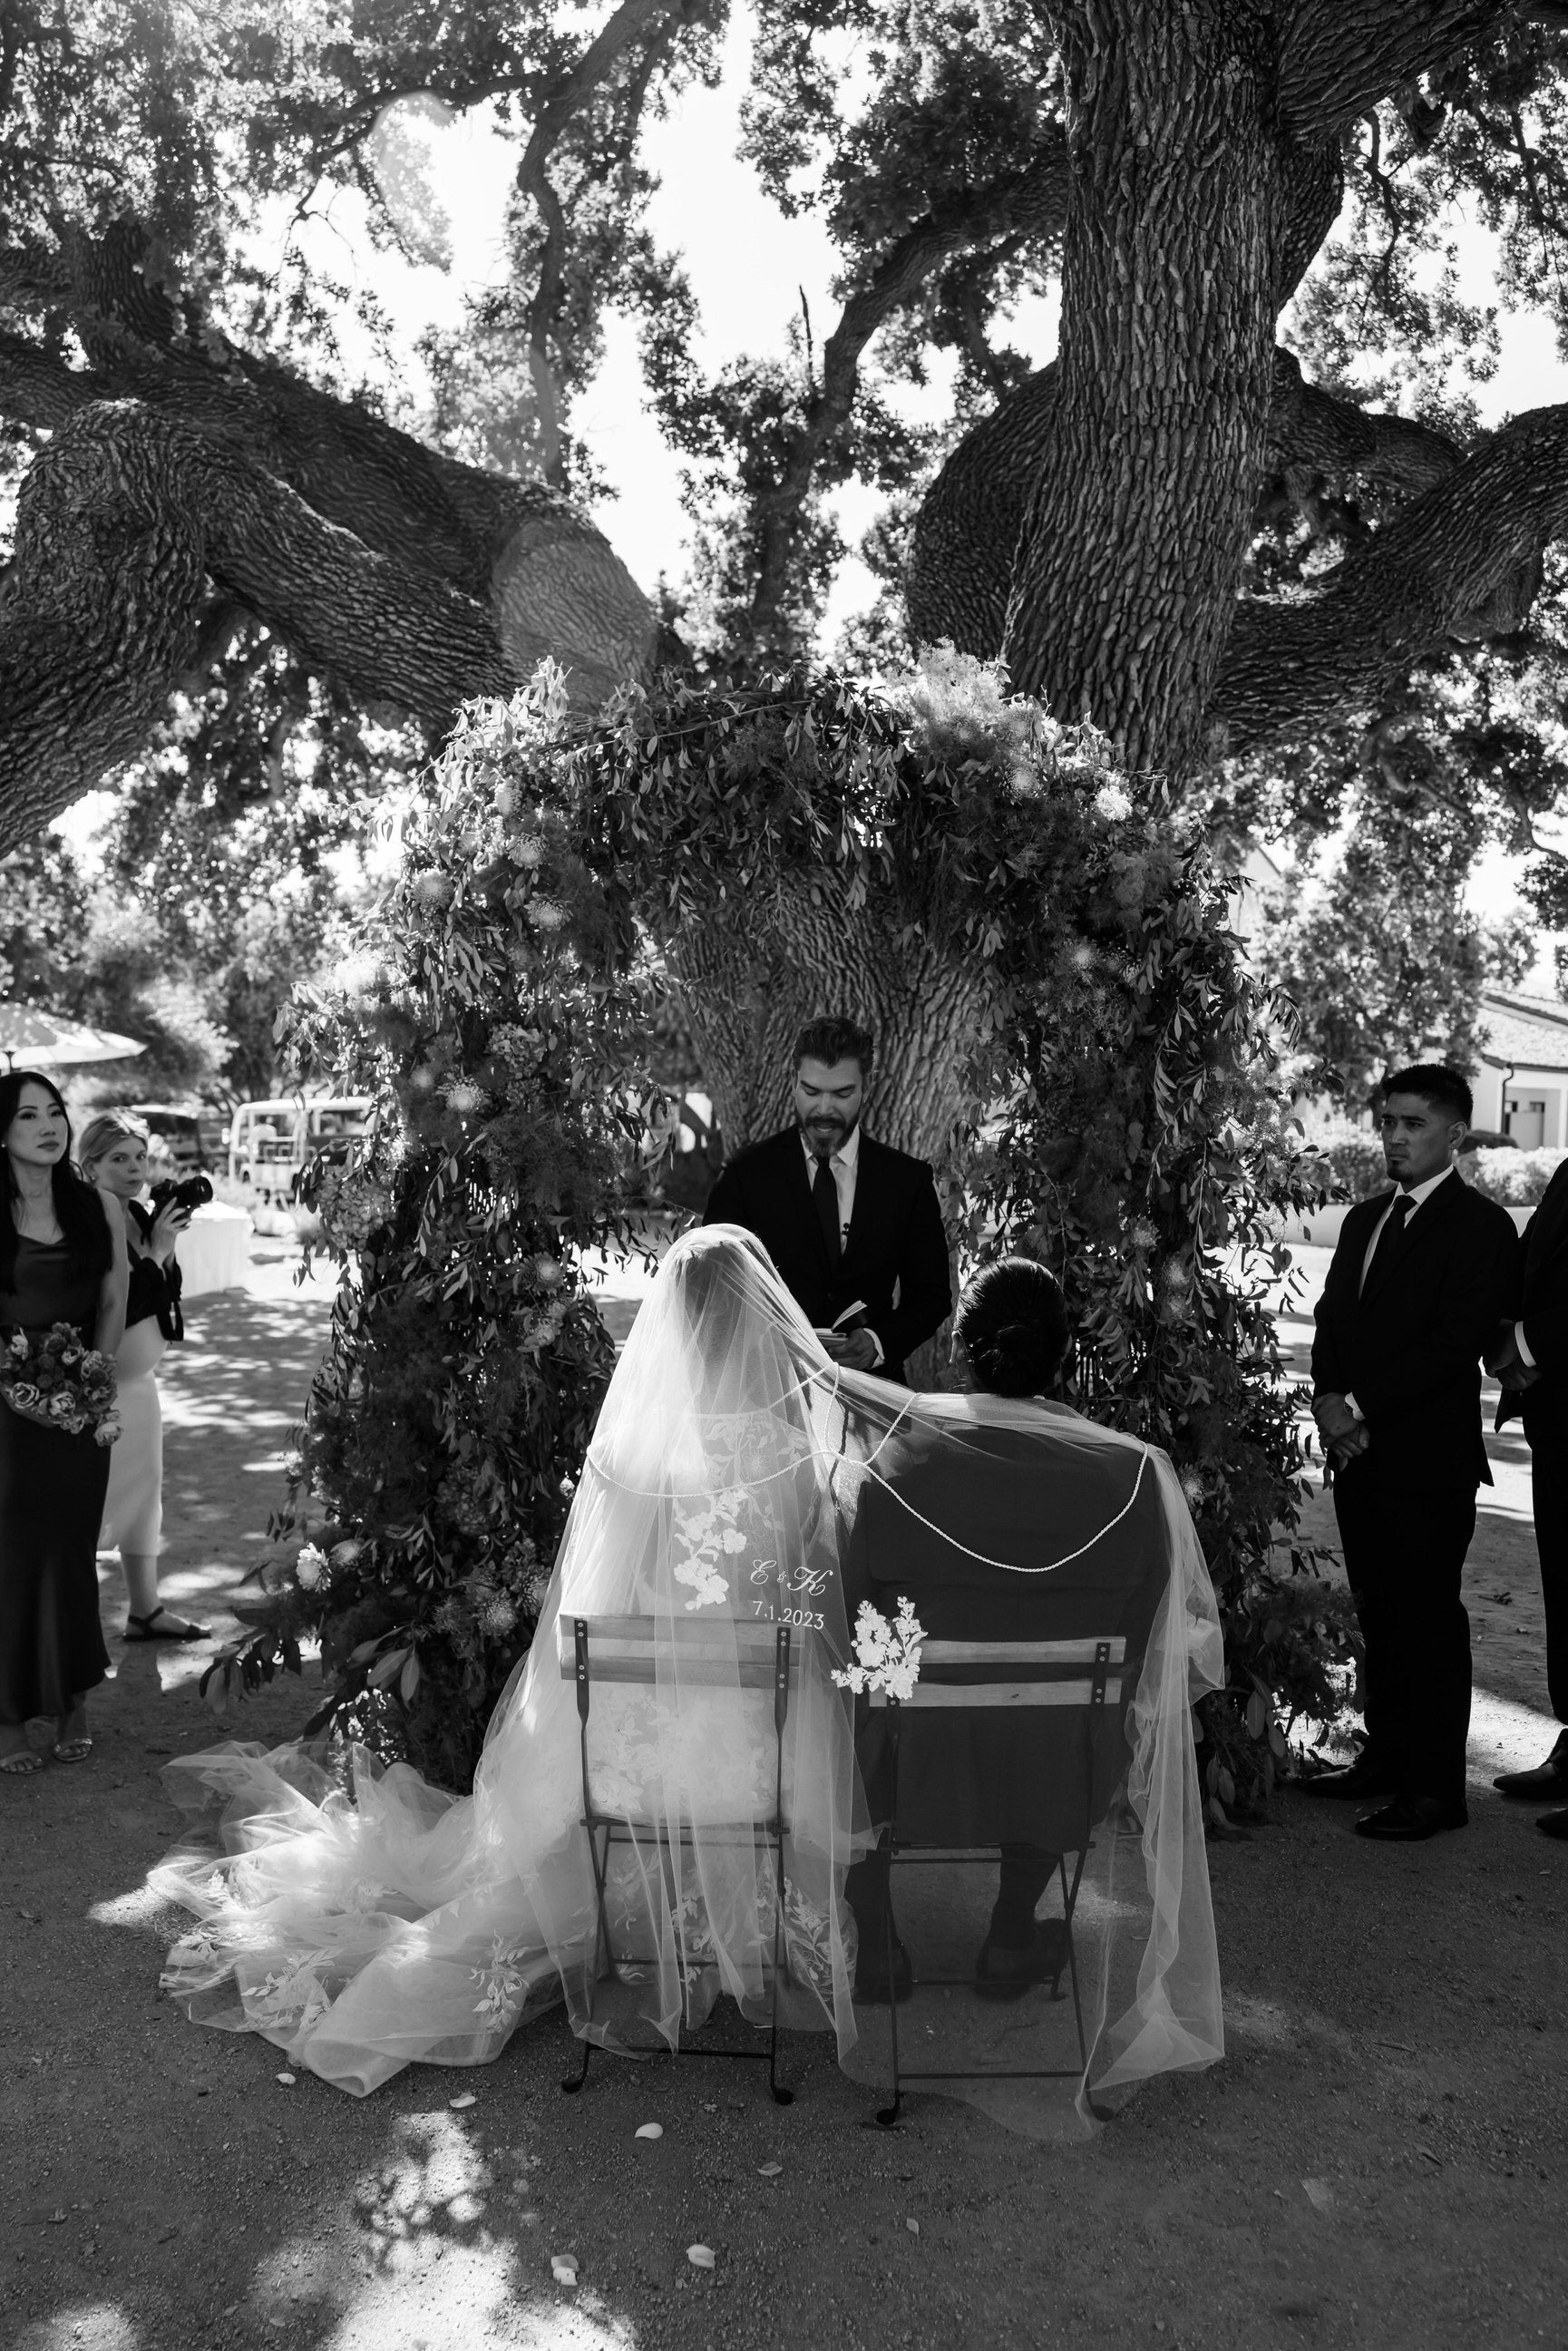 extra long unity bridal veil for filipino wedding under a tree